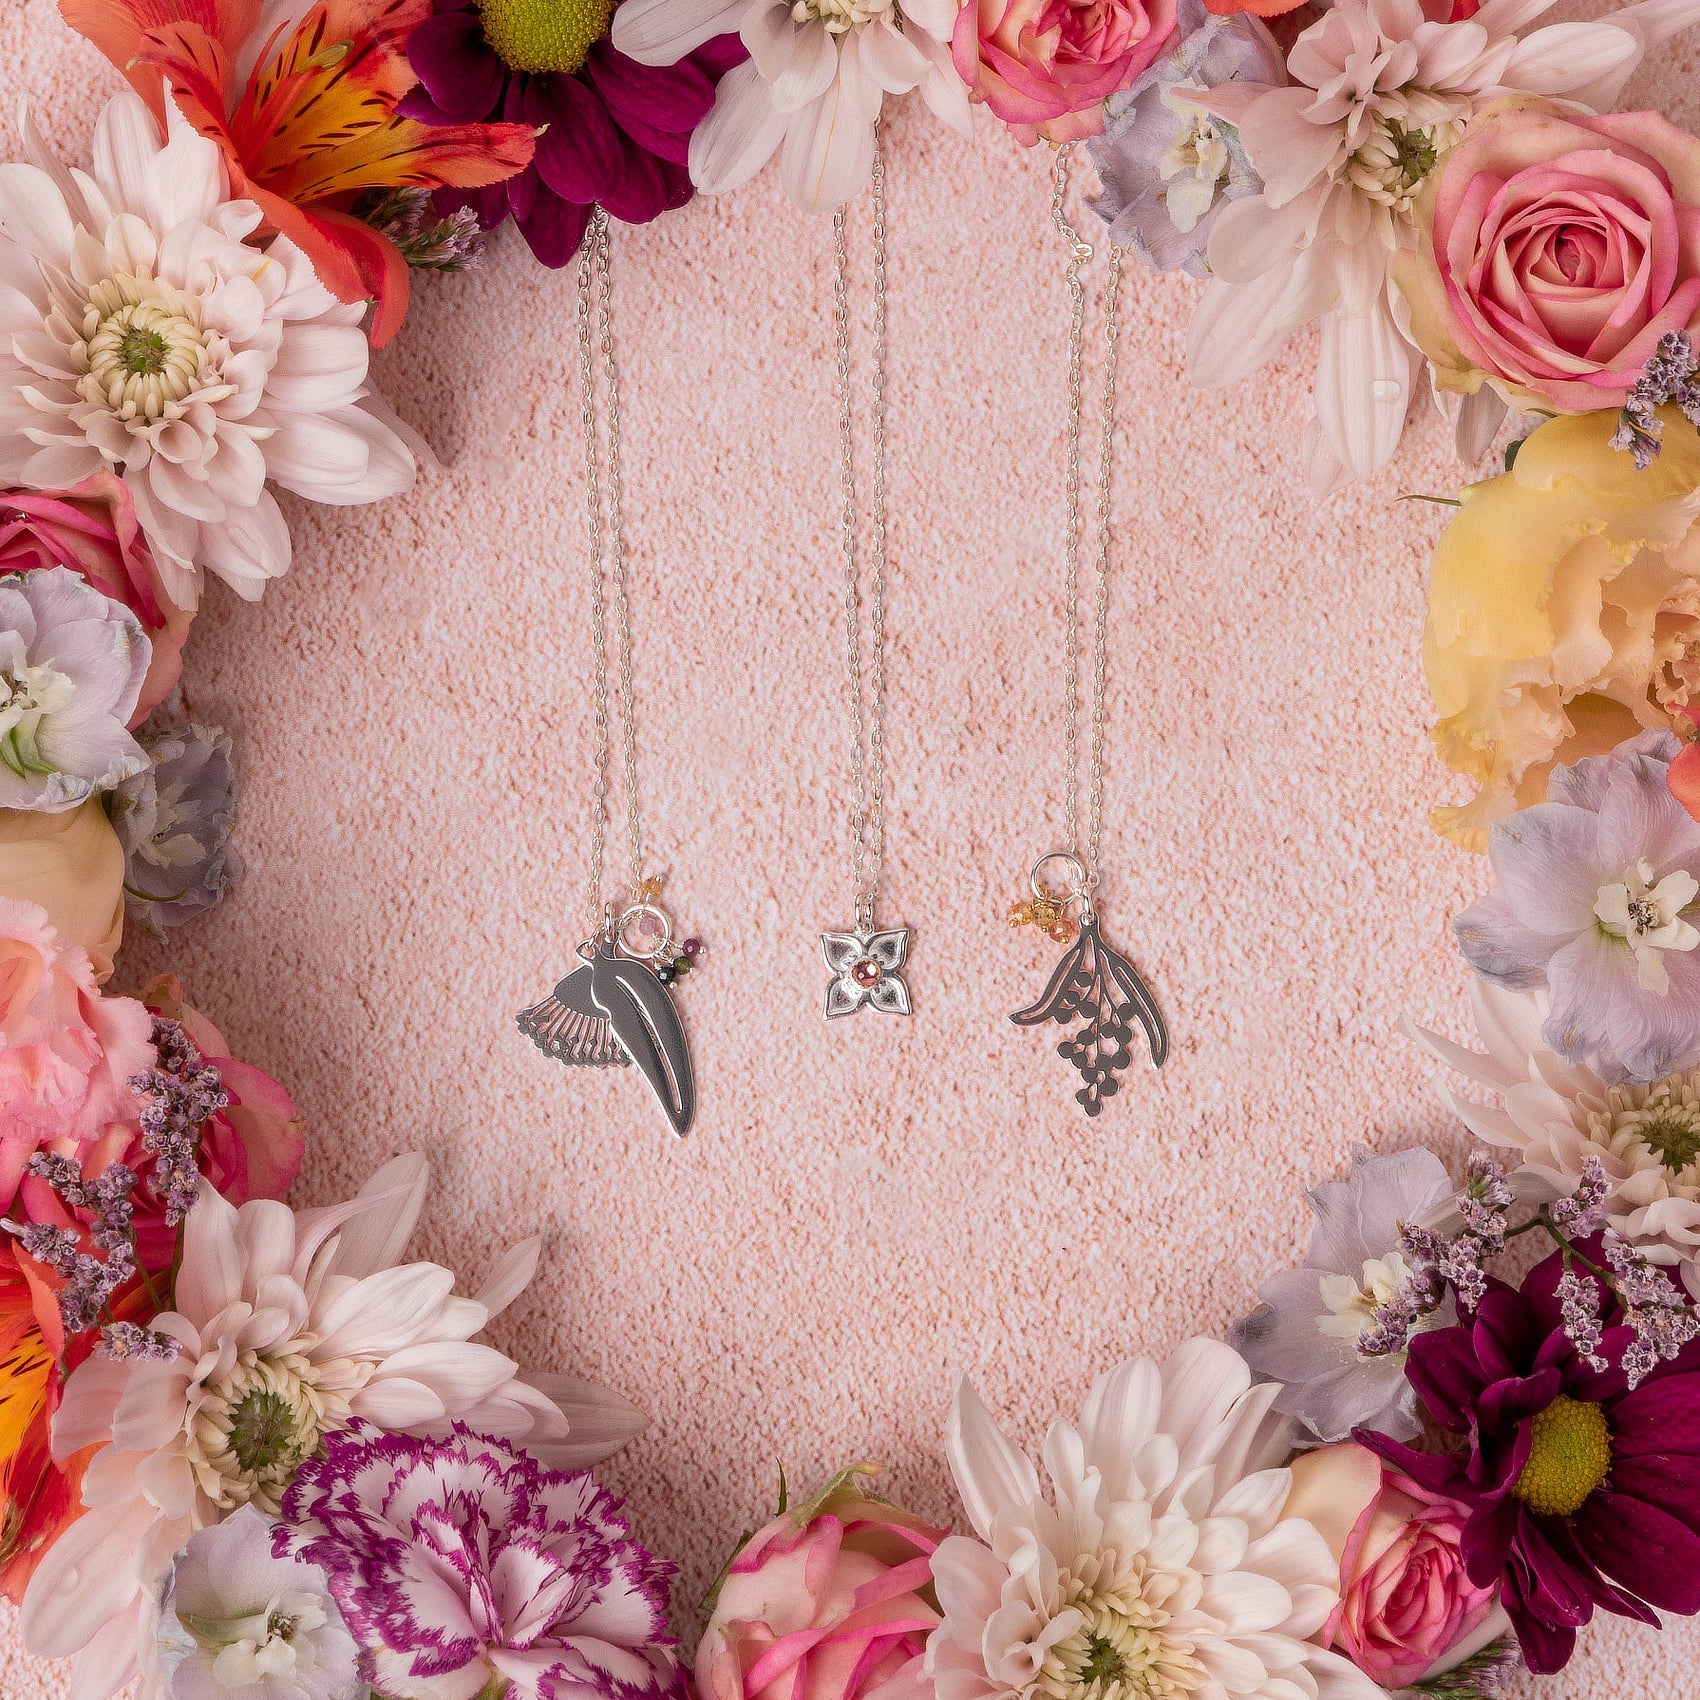 Boronia Flower & Pink Tourmaline Necklace - Simone Walsh Jewellery Australia